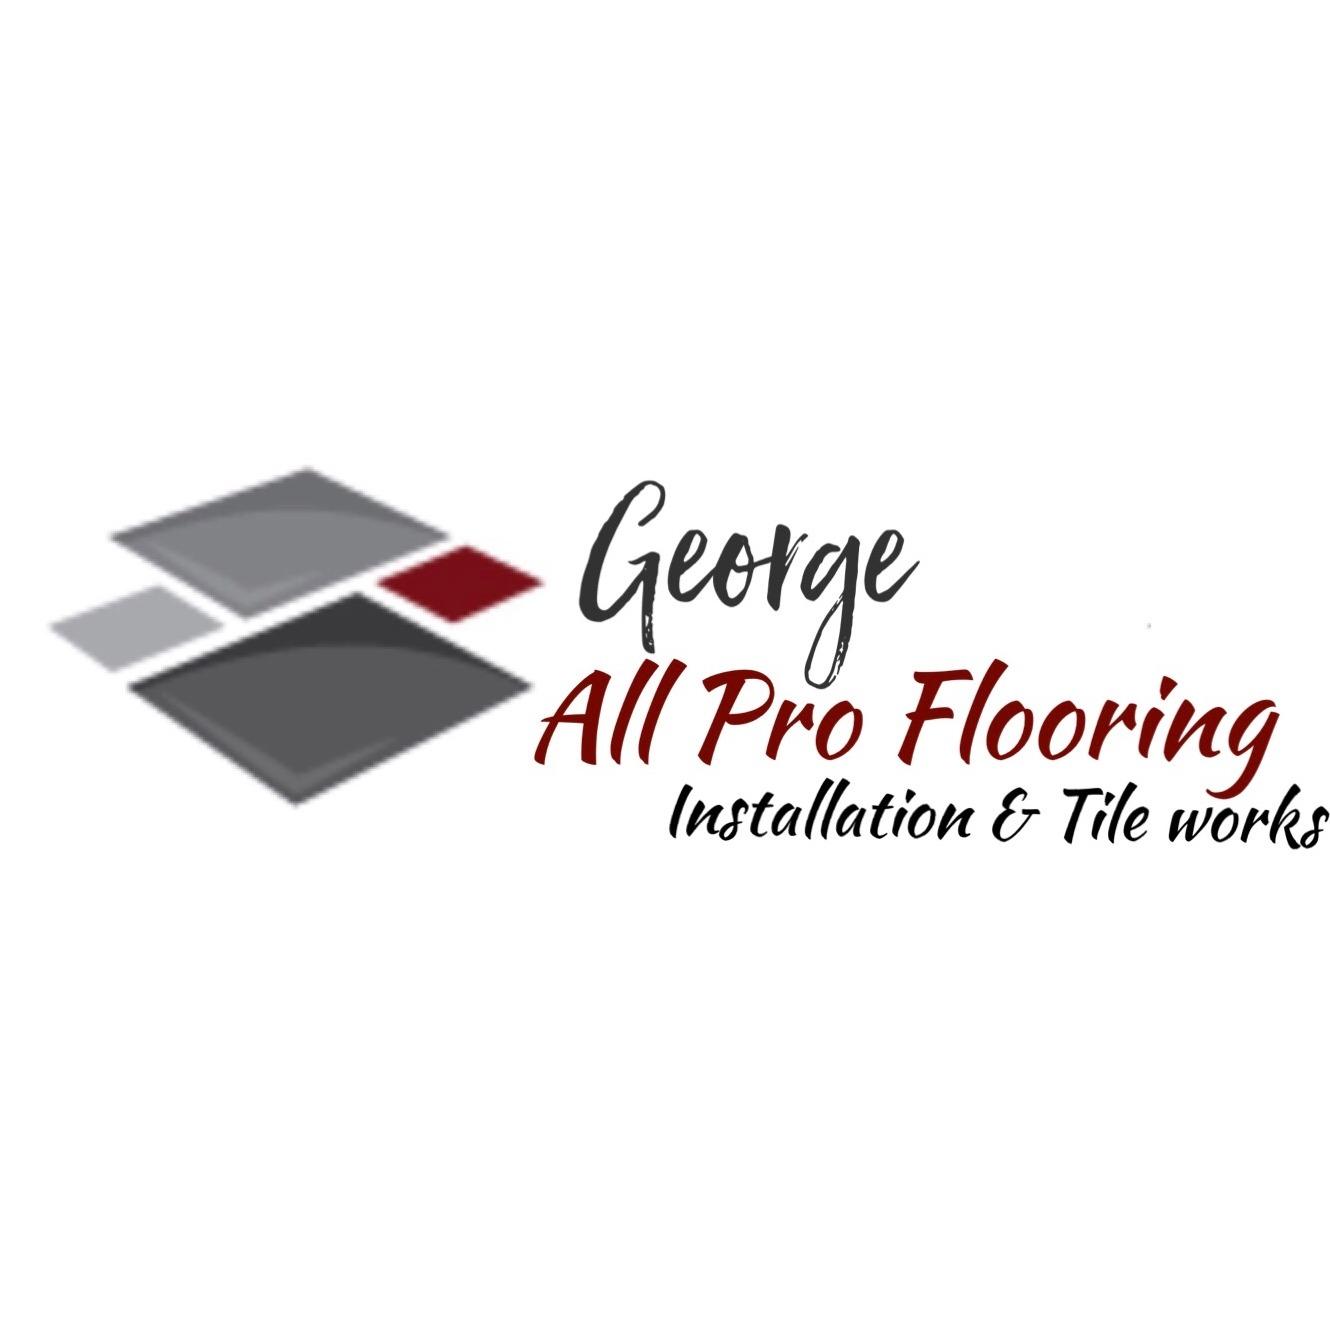 george all pro flooring Logo